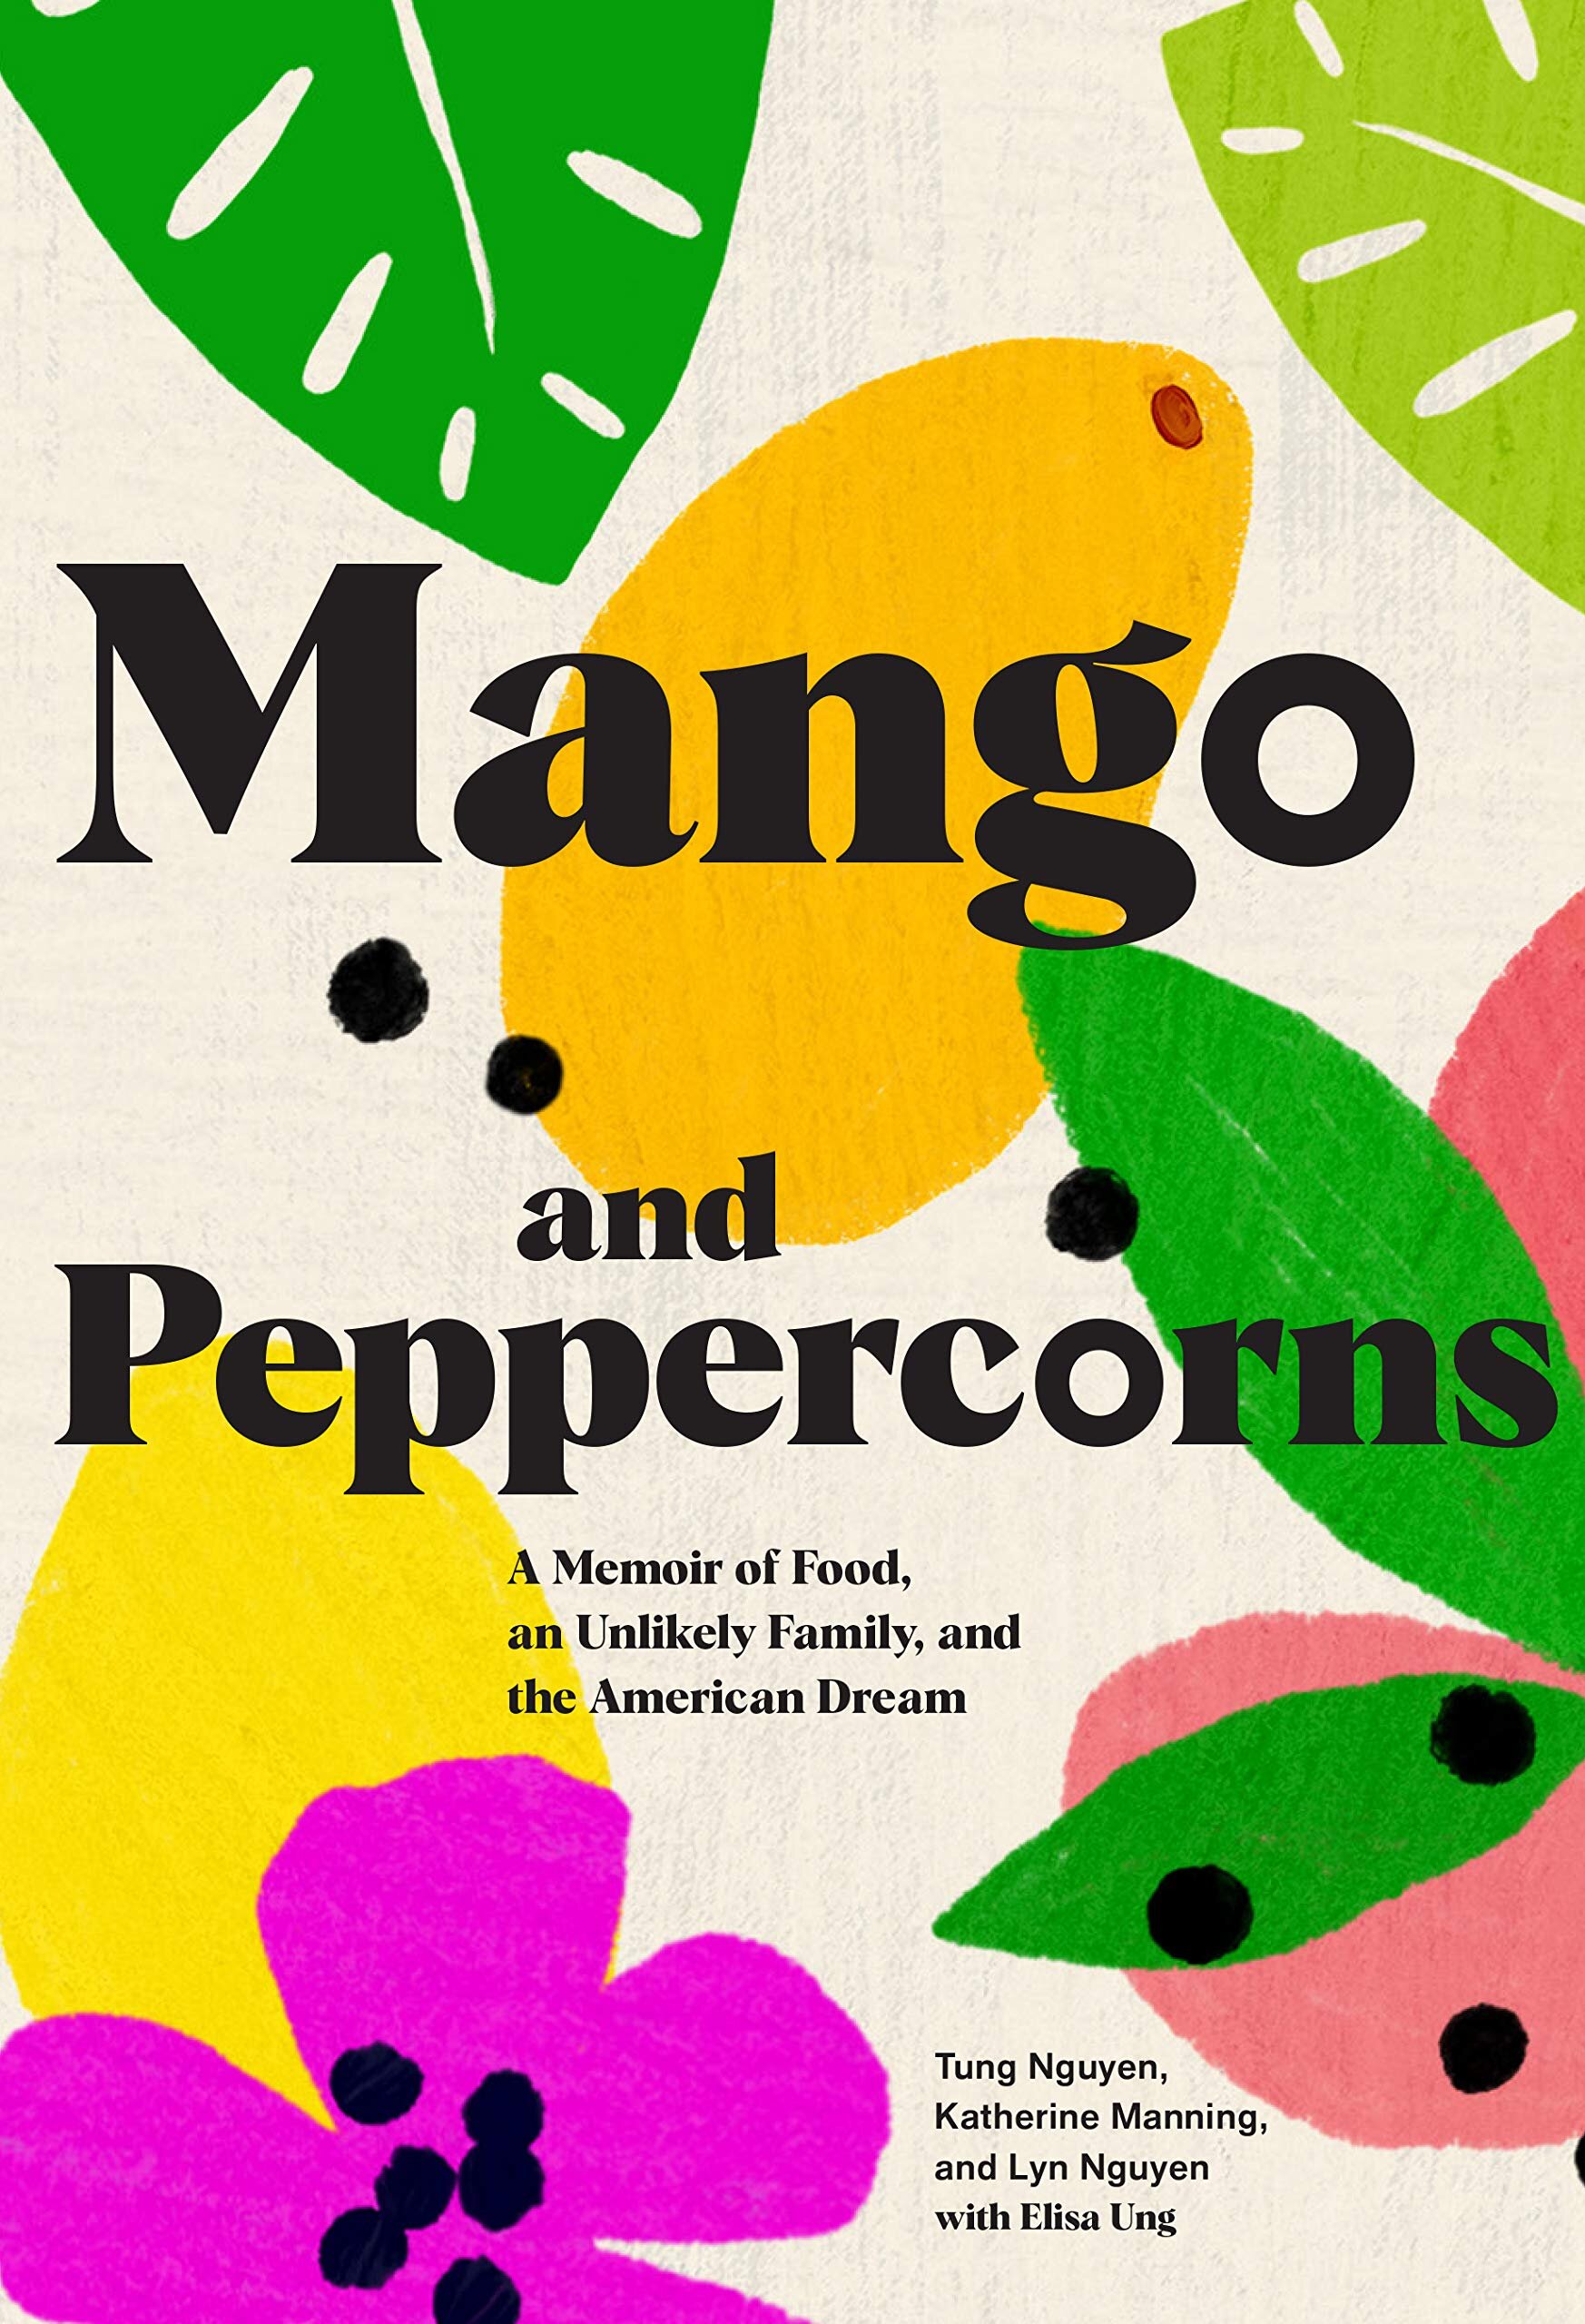 Mango and Peppercorns logo